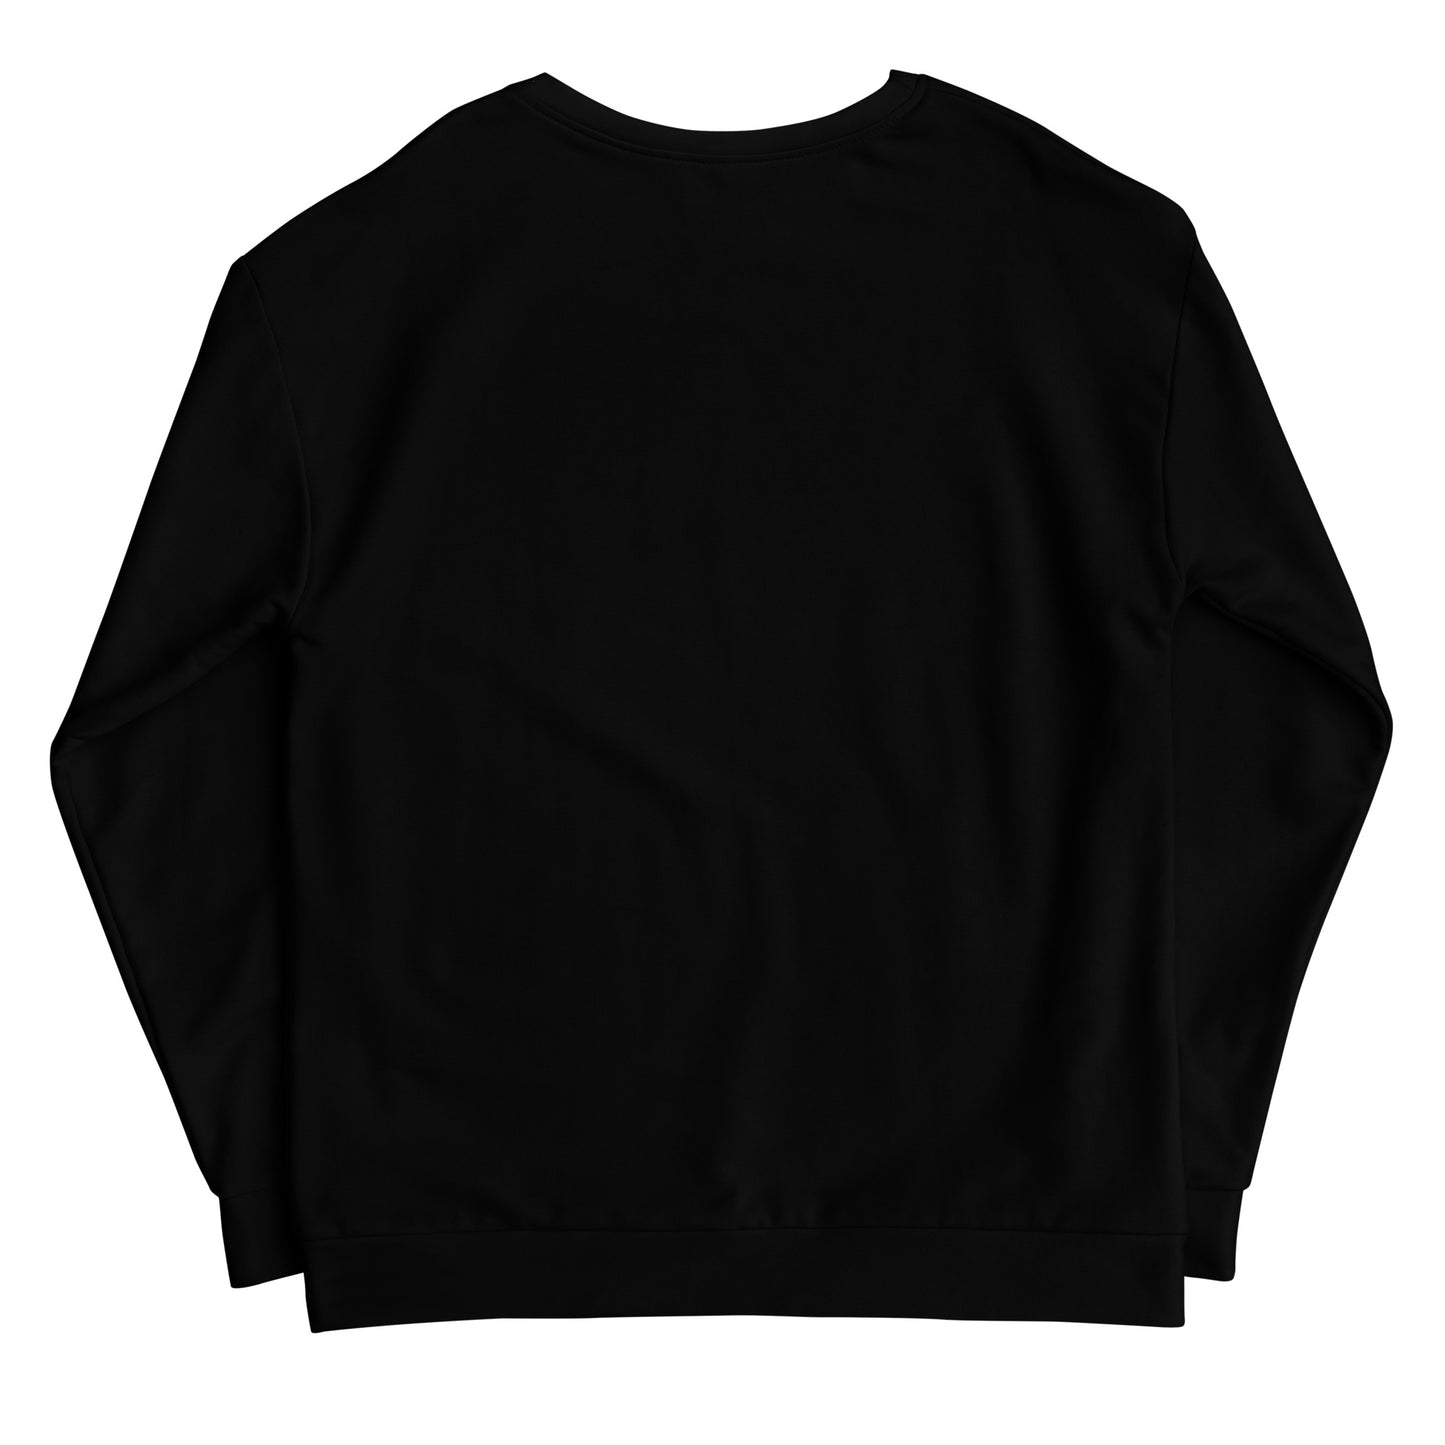 Cancerian Sweatshirt Black